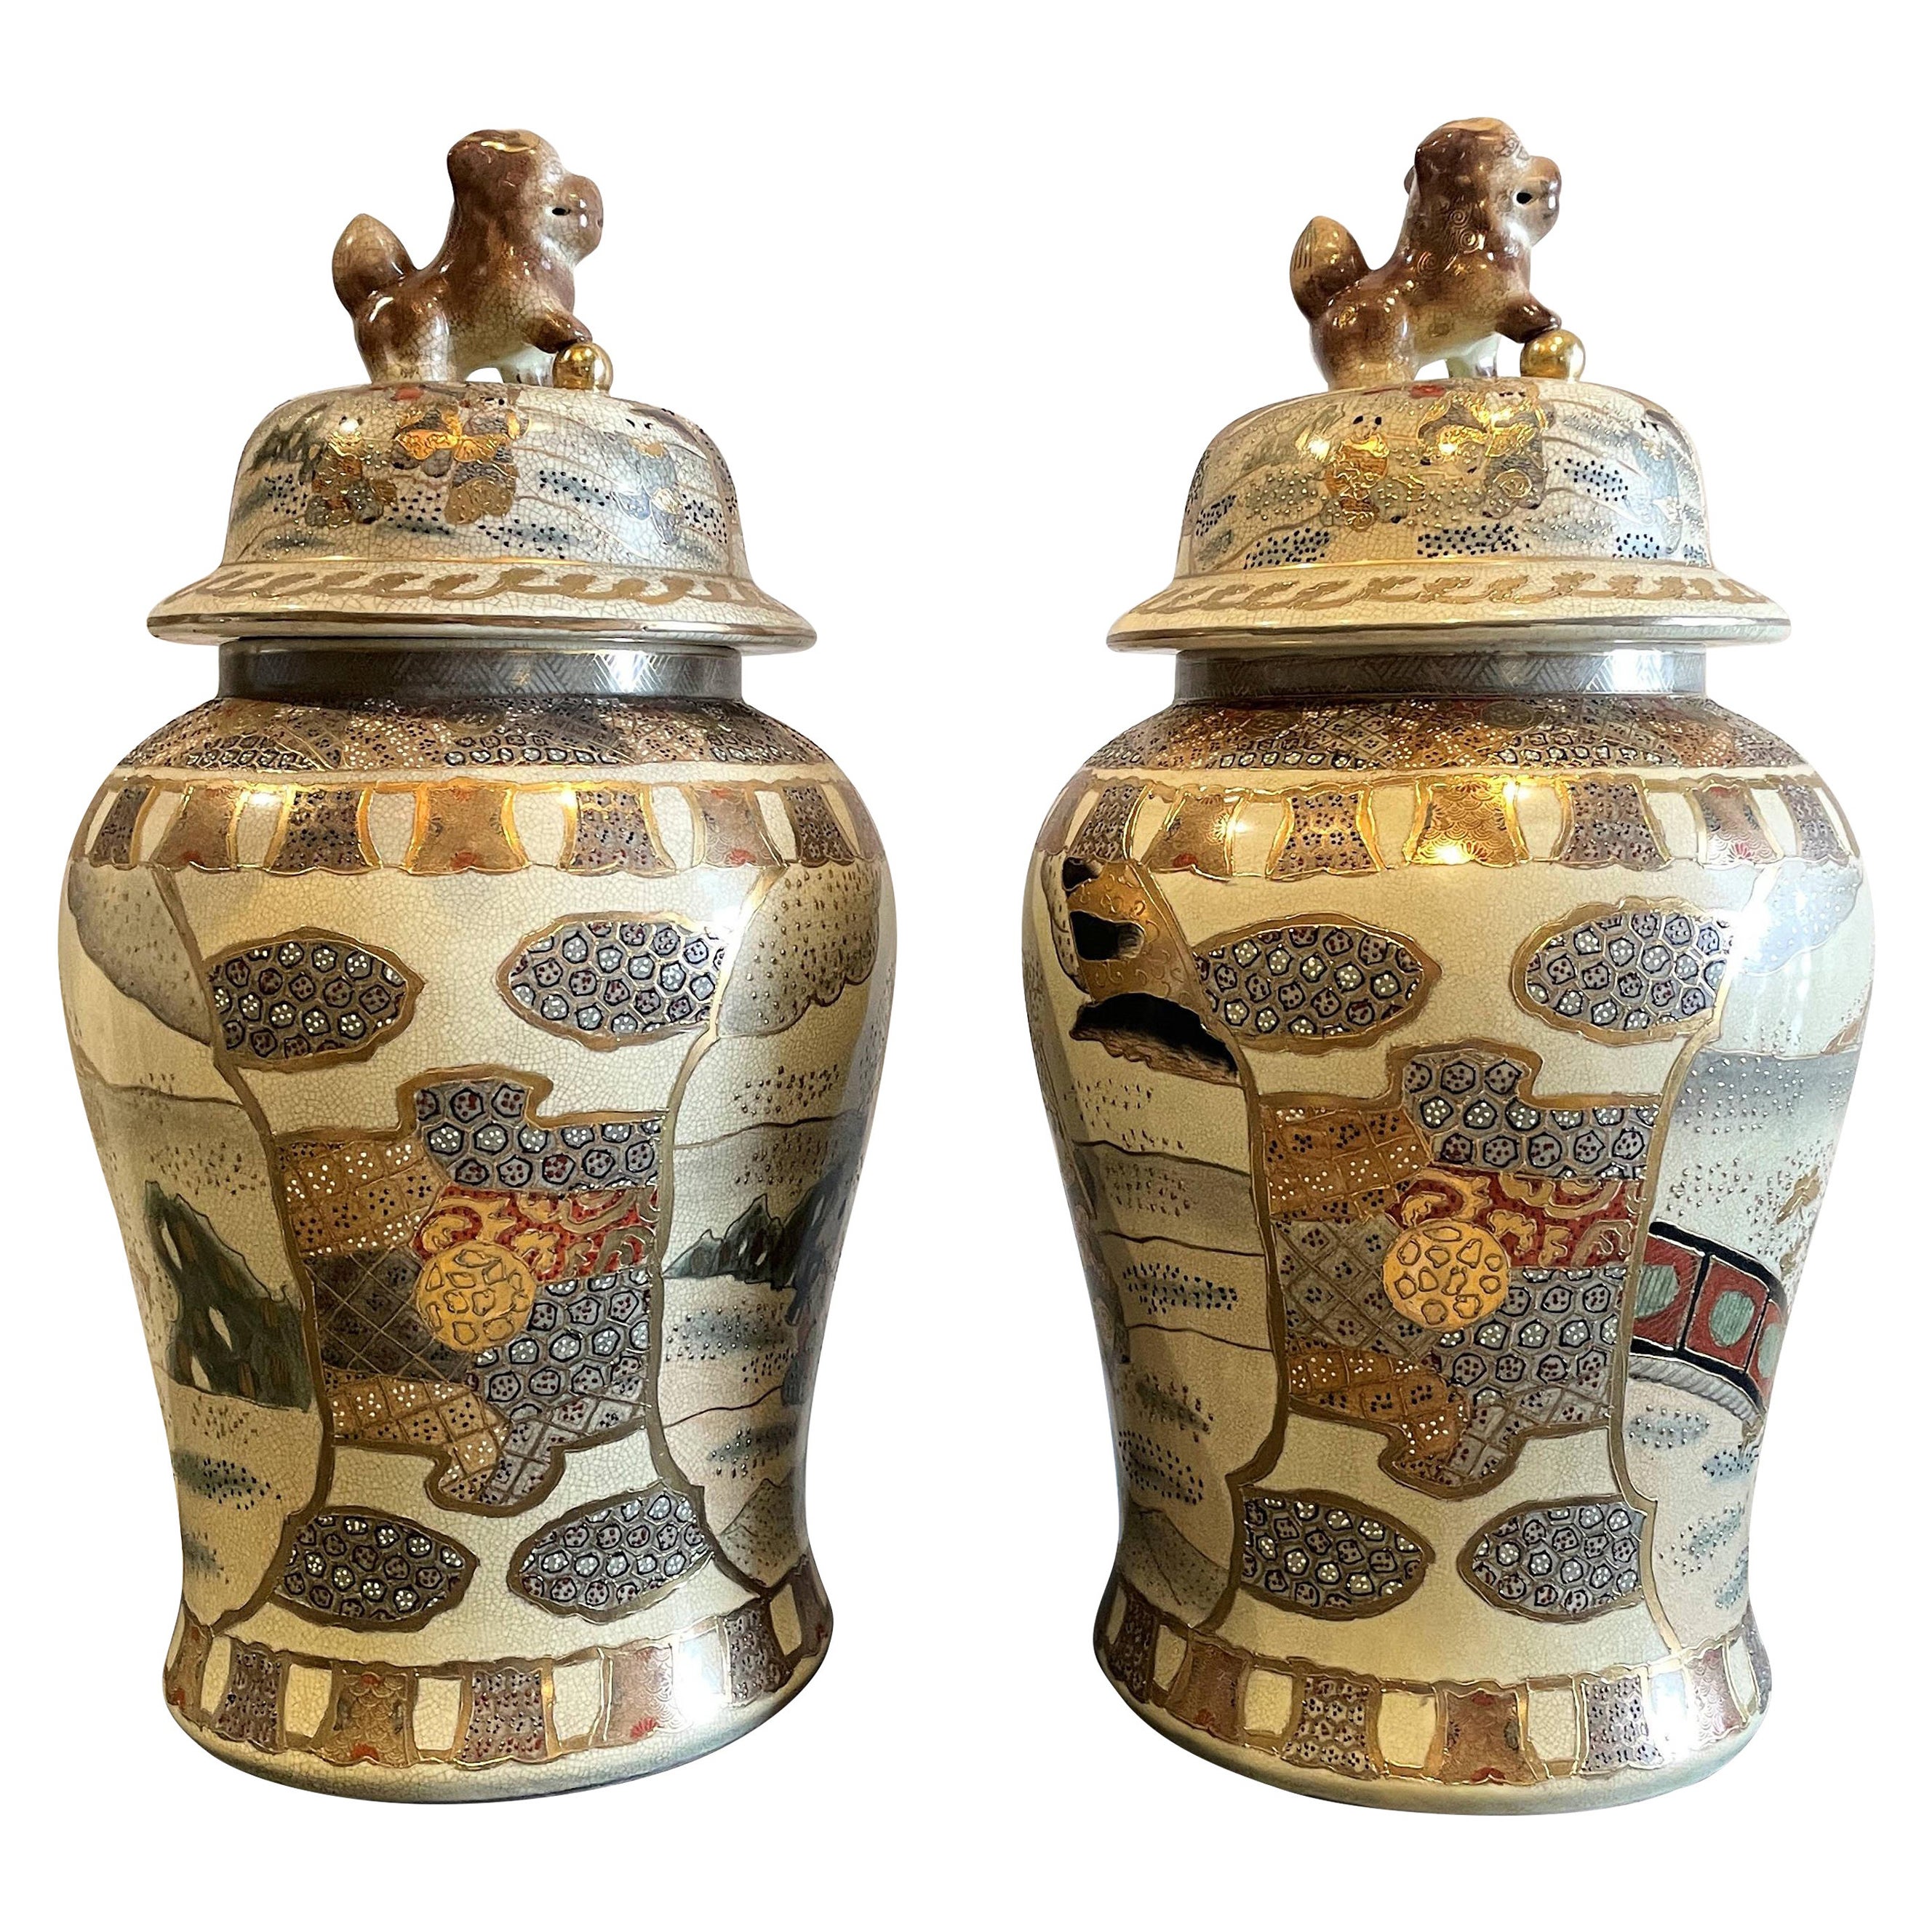 Pair of Taisho Period Japanese Satsuma Style Covered Jars